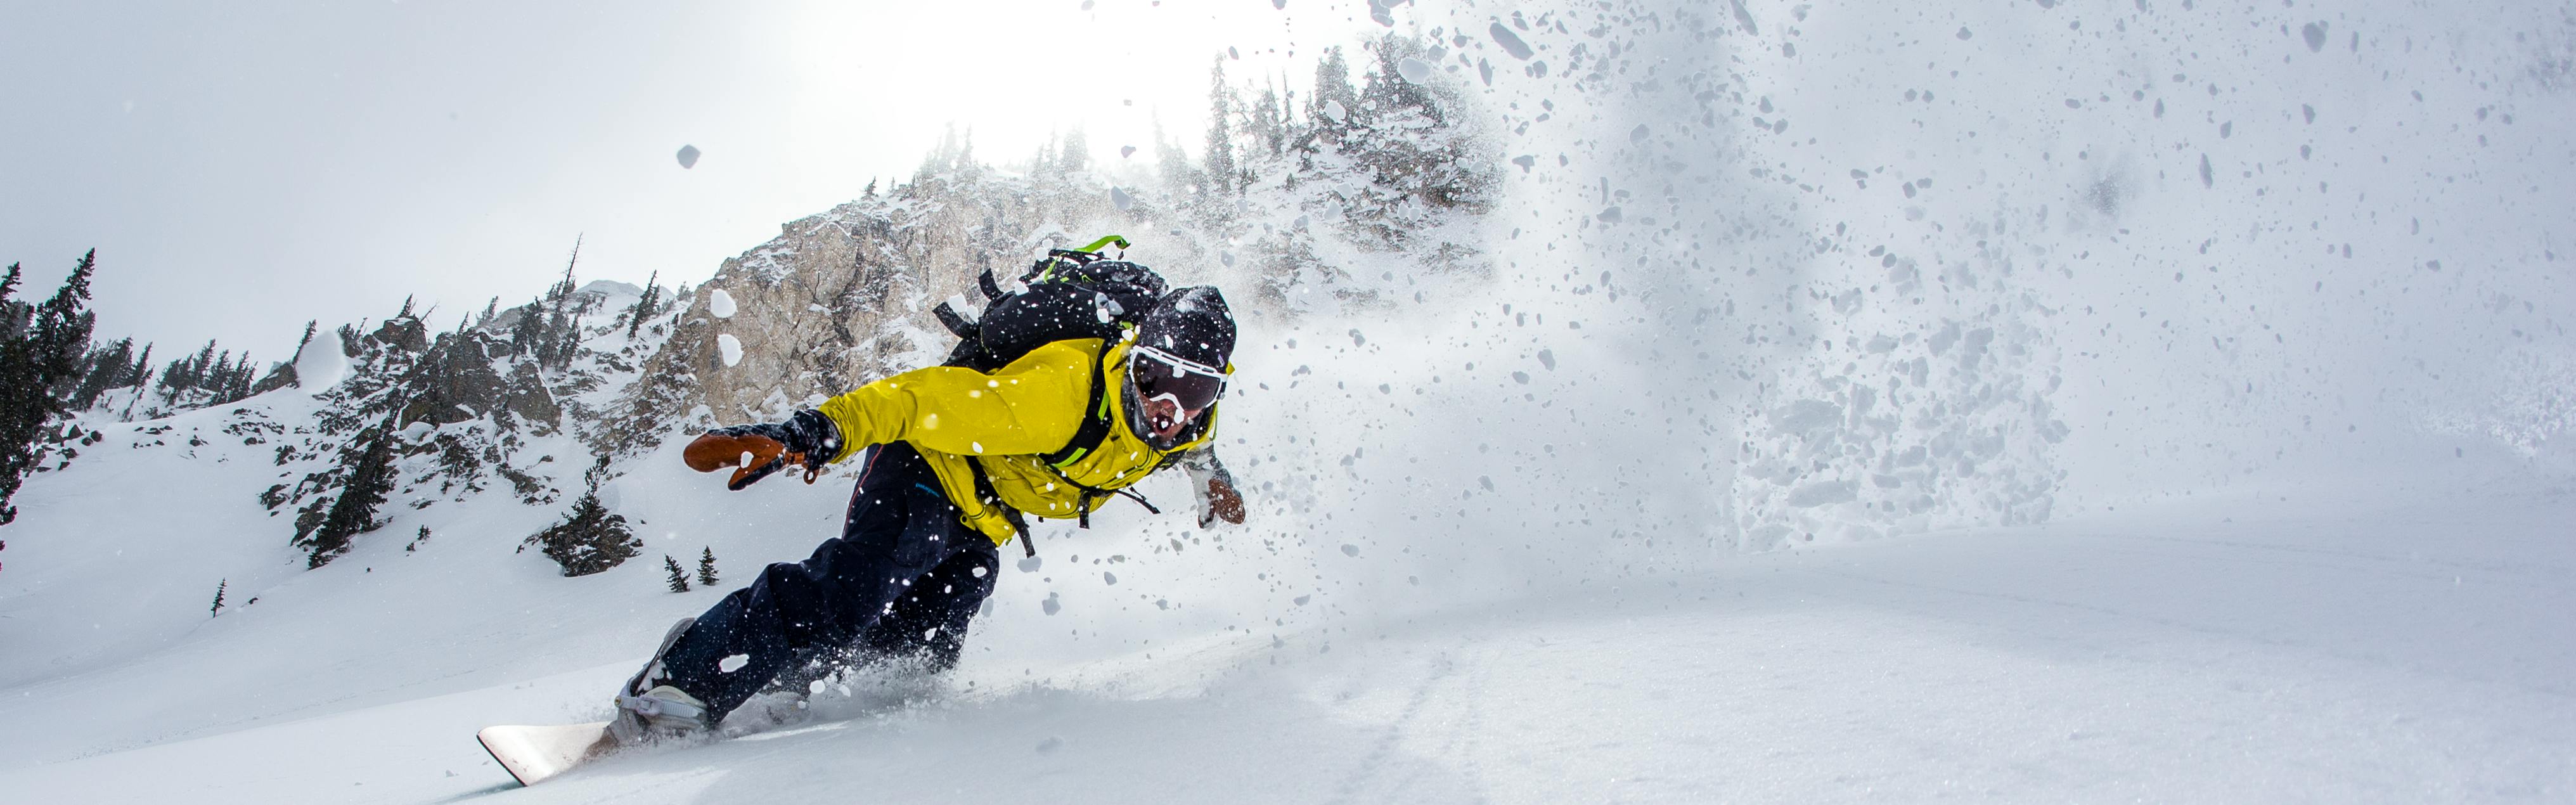 Snowboarder slicing through powder, sending a wave of fresh powder in his wake